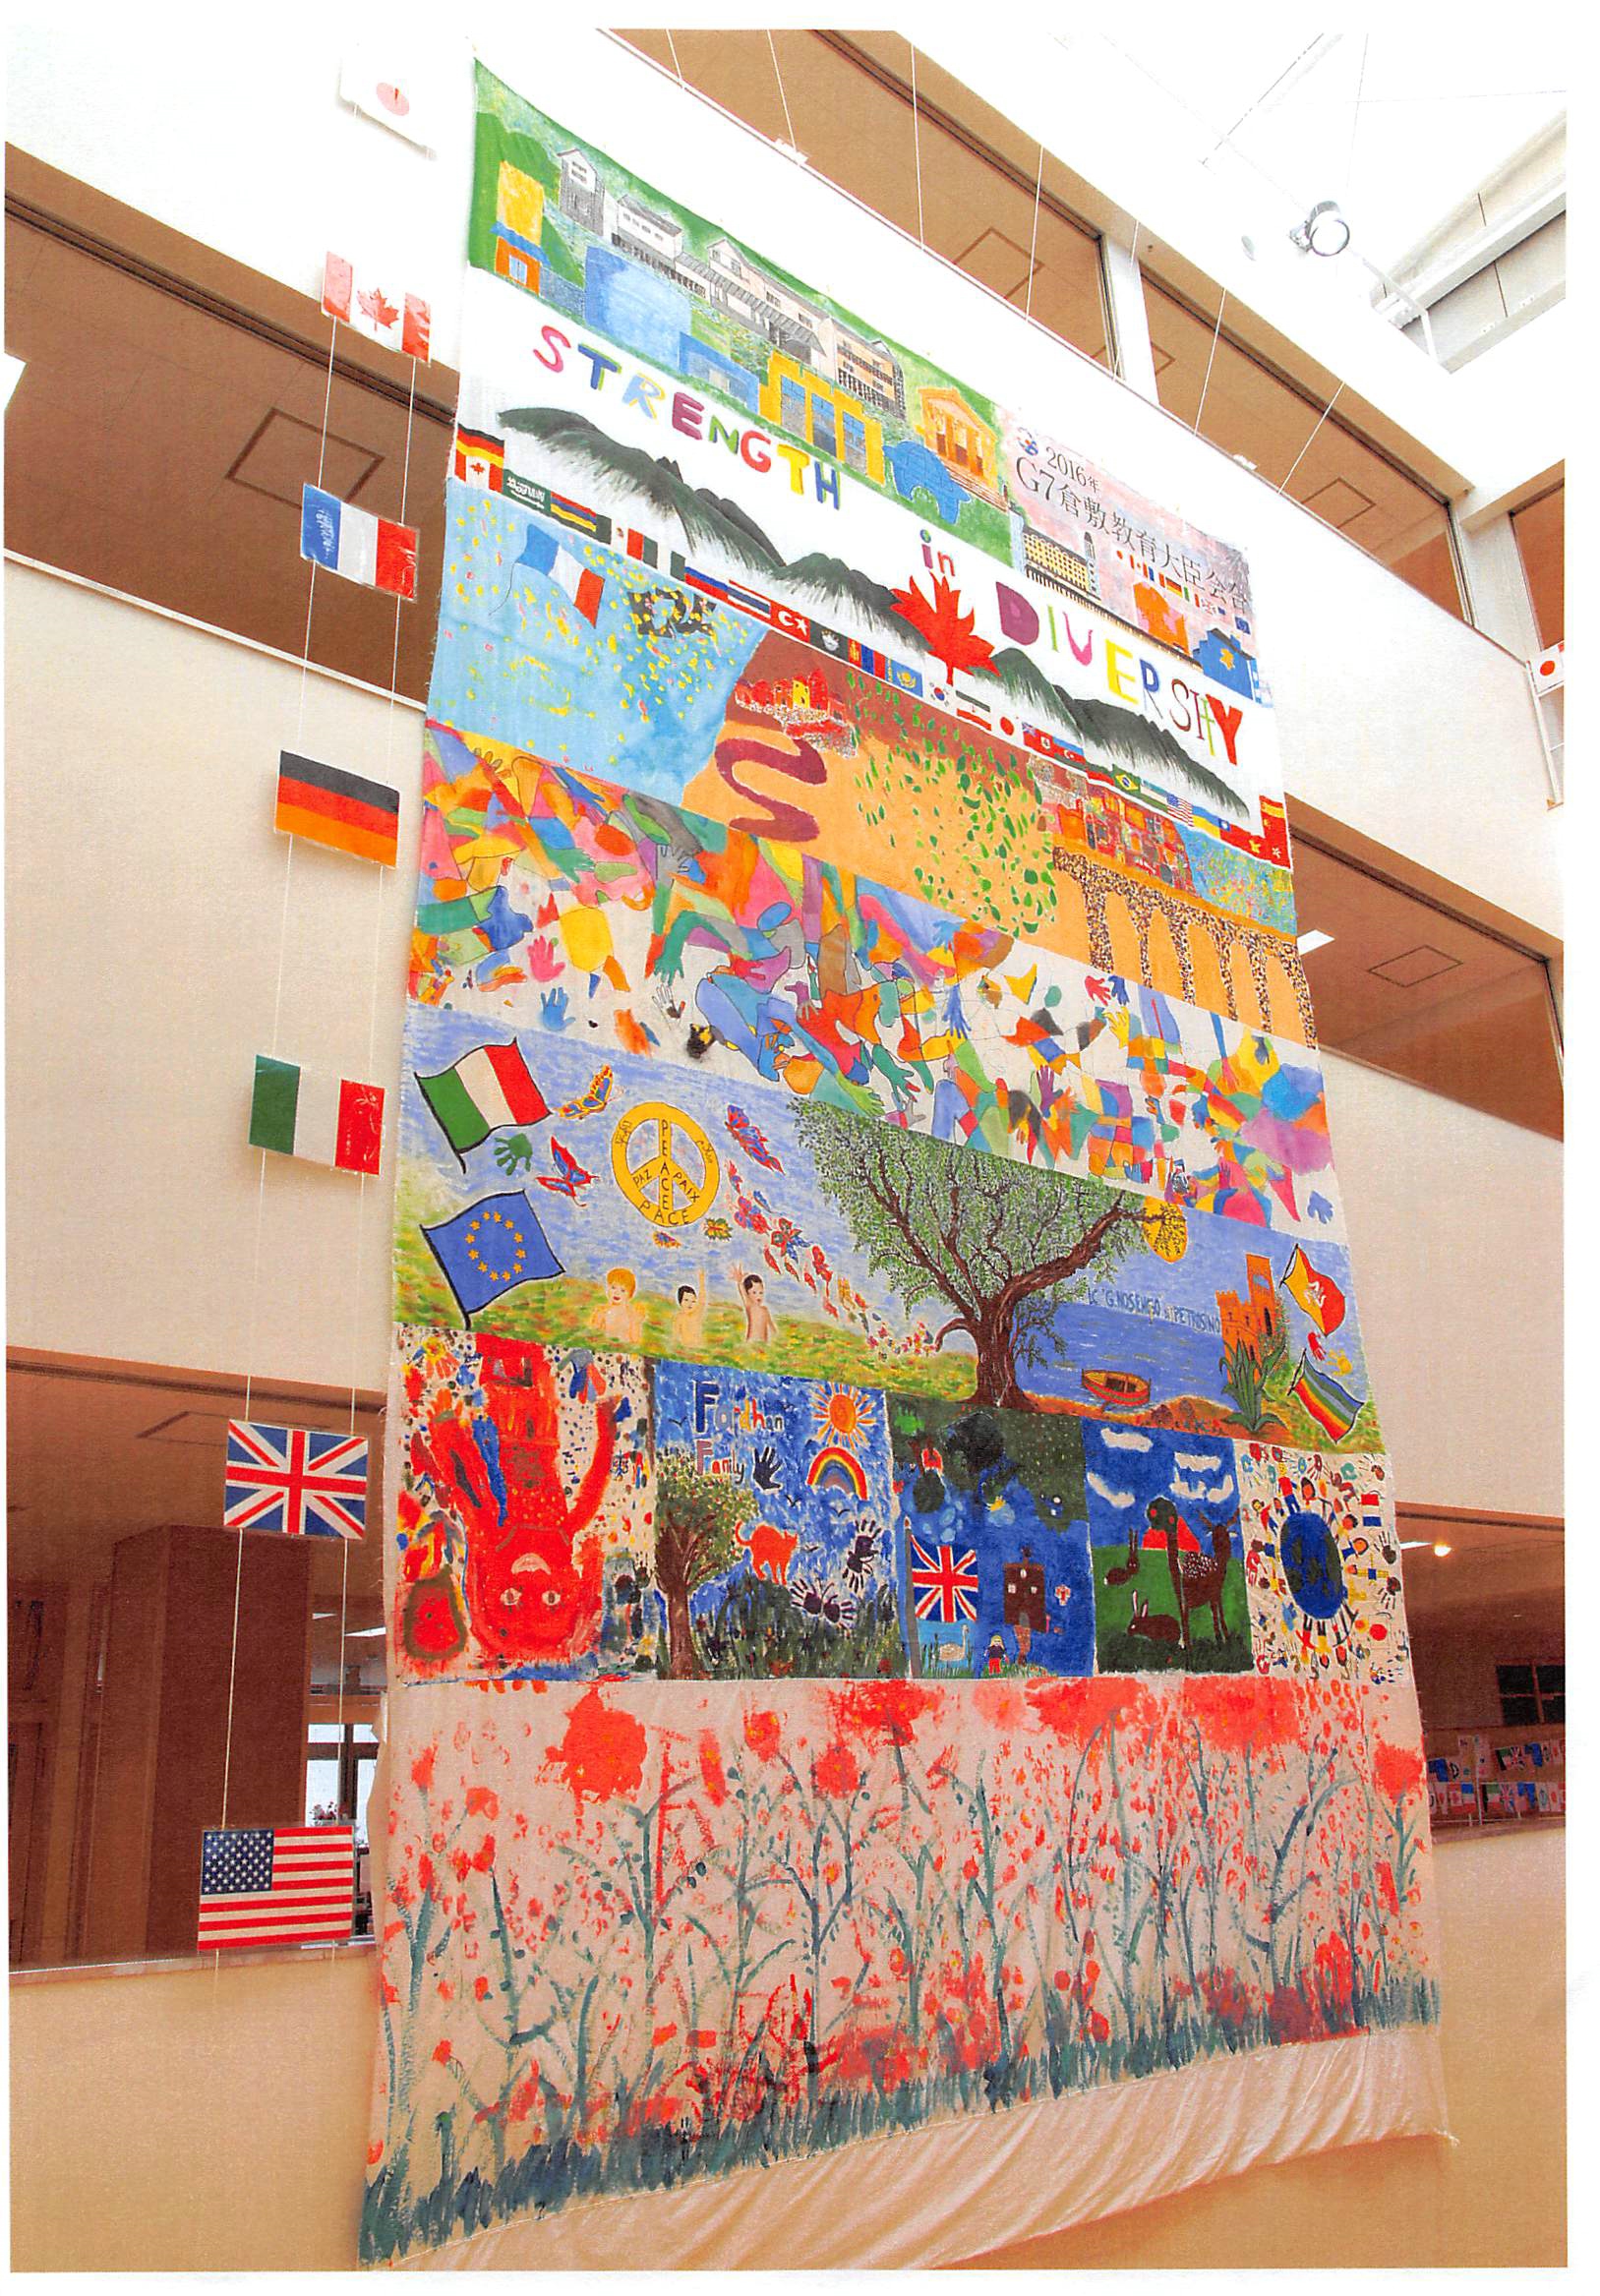 We held "The Biggest Painting in the World 2020 G7 Kurashiki Education Ministers’ Meeting in Okayama"